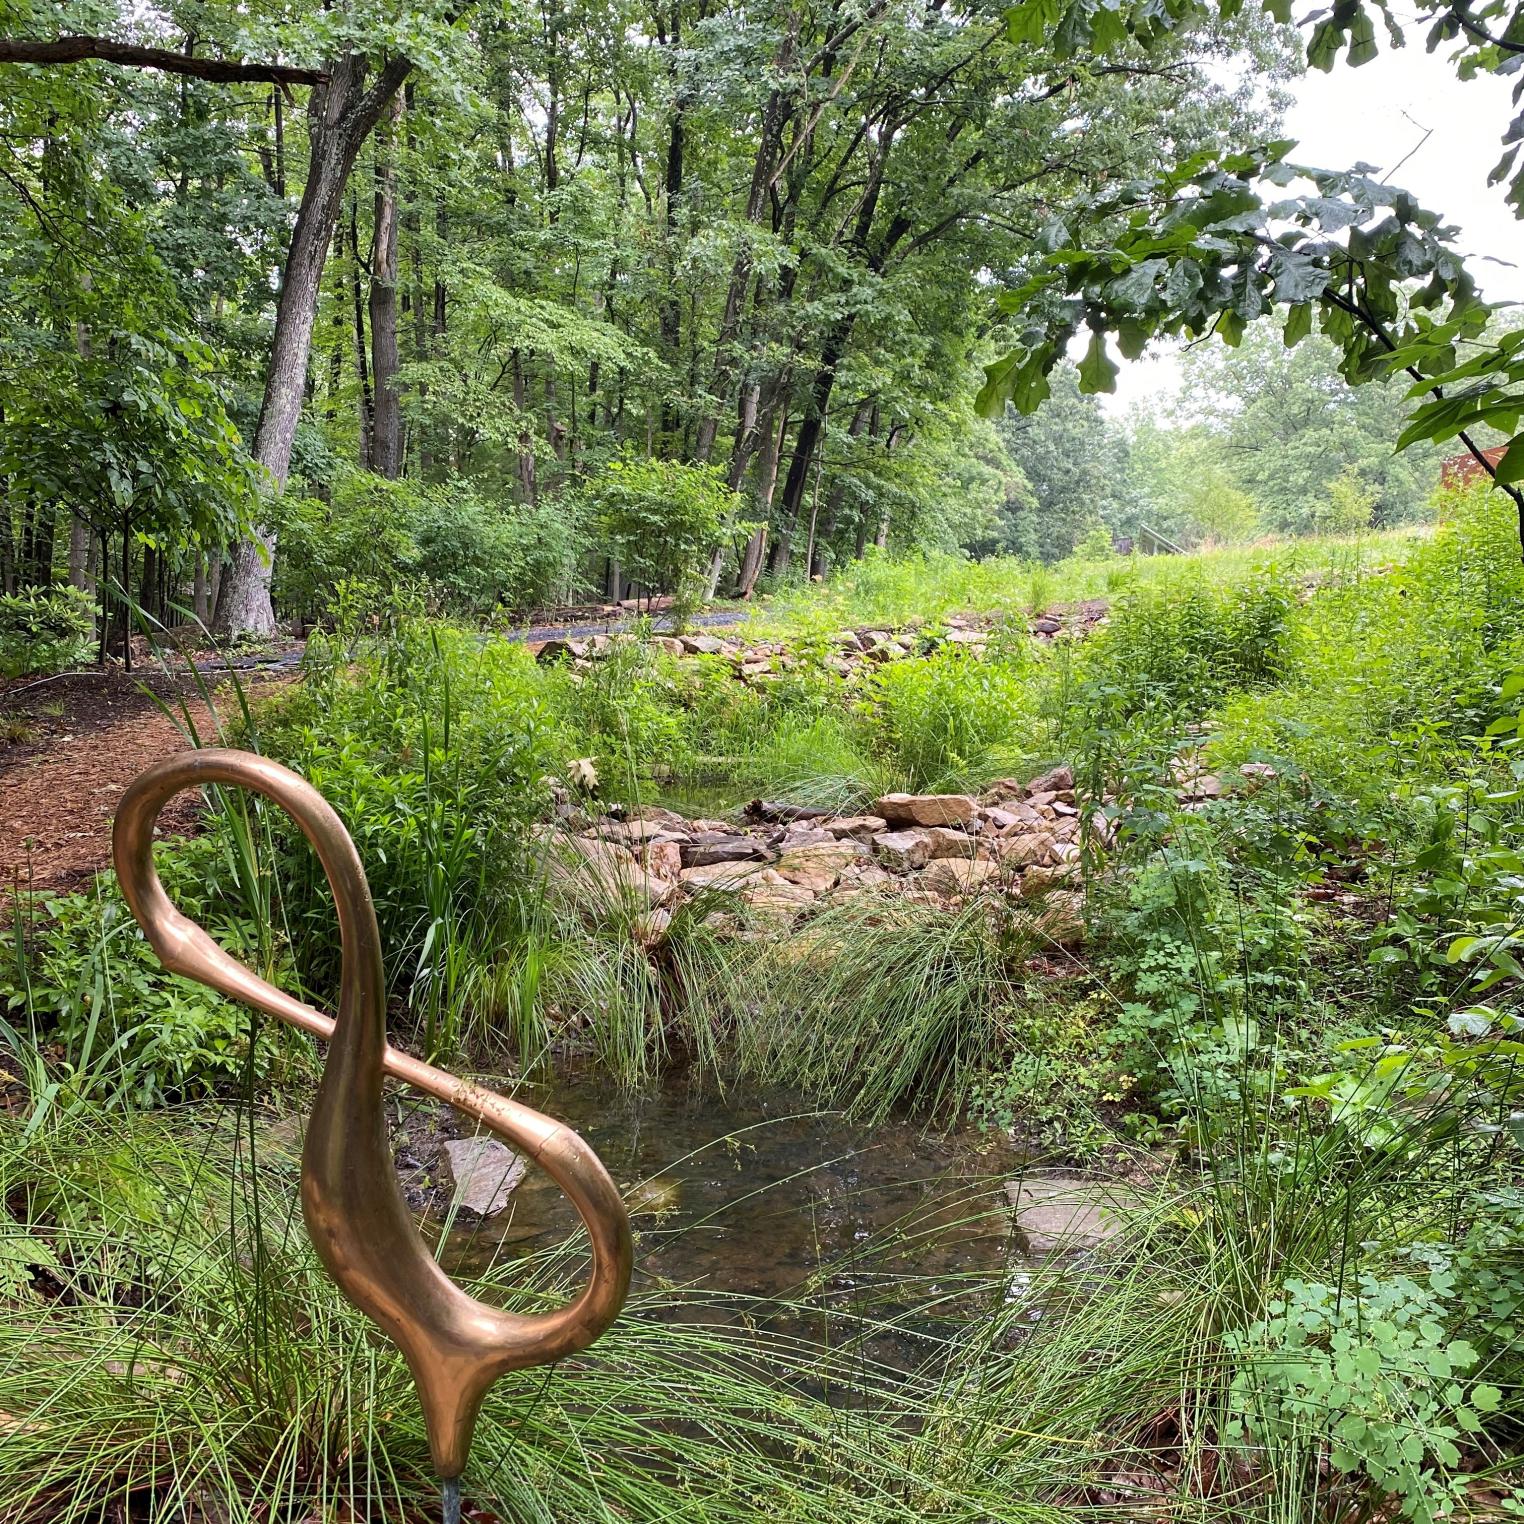 The Bower: Native Garden and Sculpture Park